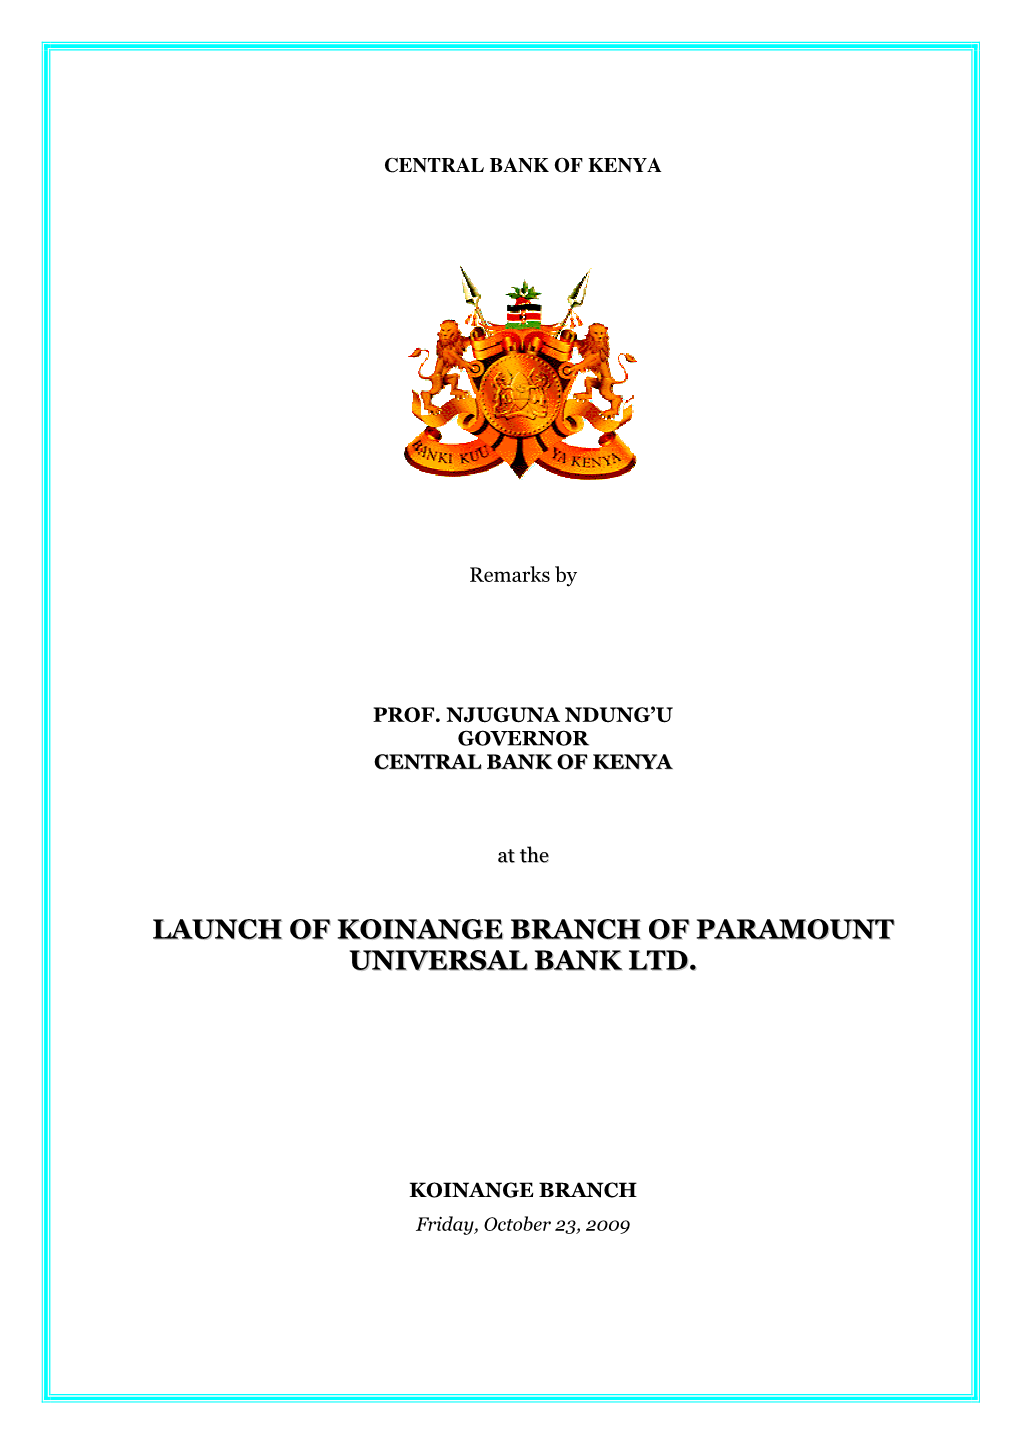 Launch of Koinange Branch of Paramount Universal Bank Ltd